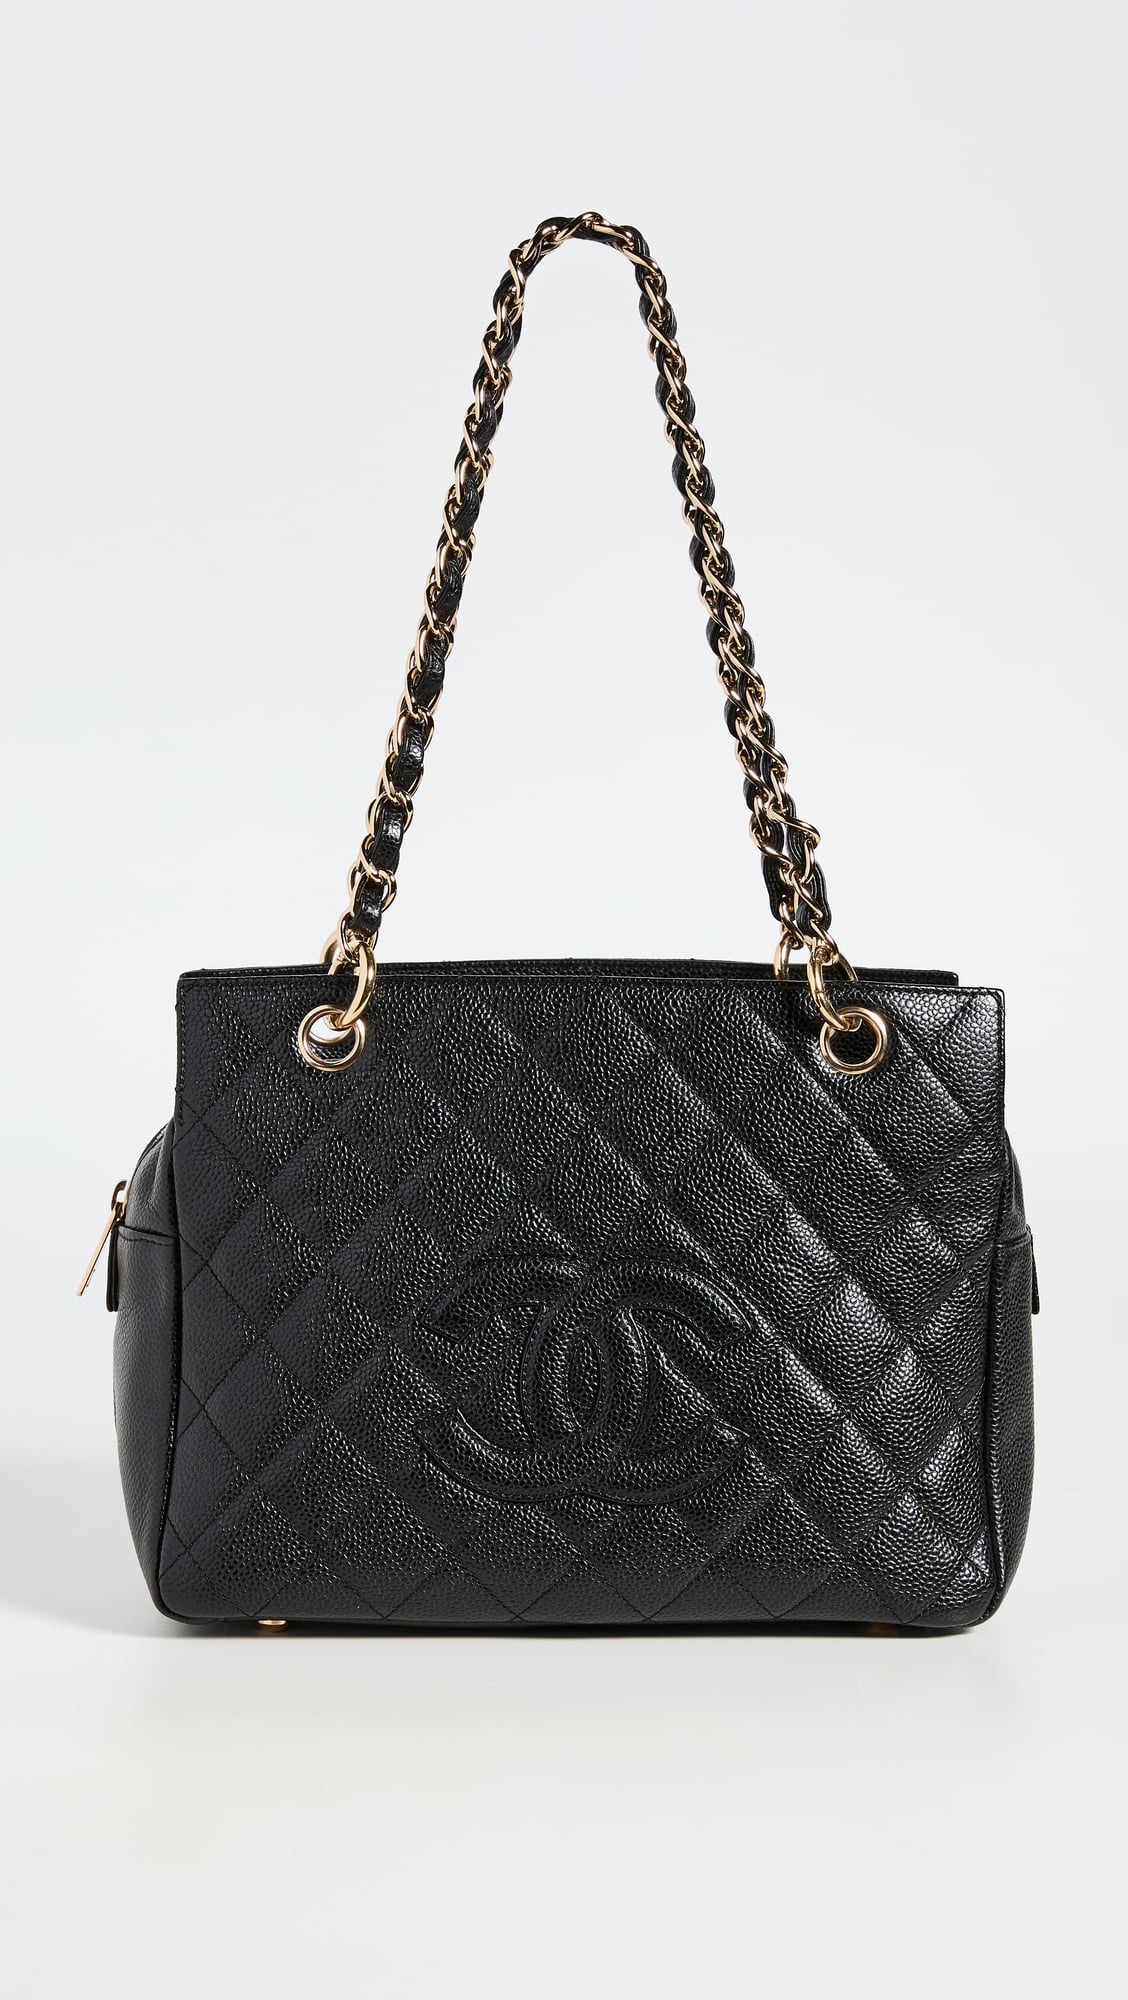 Japan Brand Lux - It's rare, Vintage Chanel single flap bag #handbag # chanelbag #brandedbag #branded #totebag #chanel